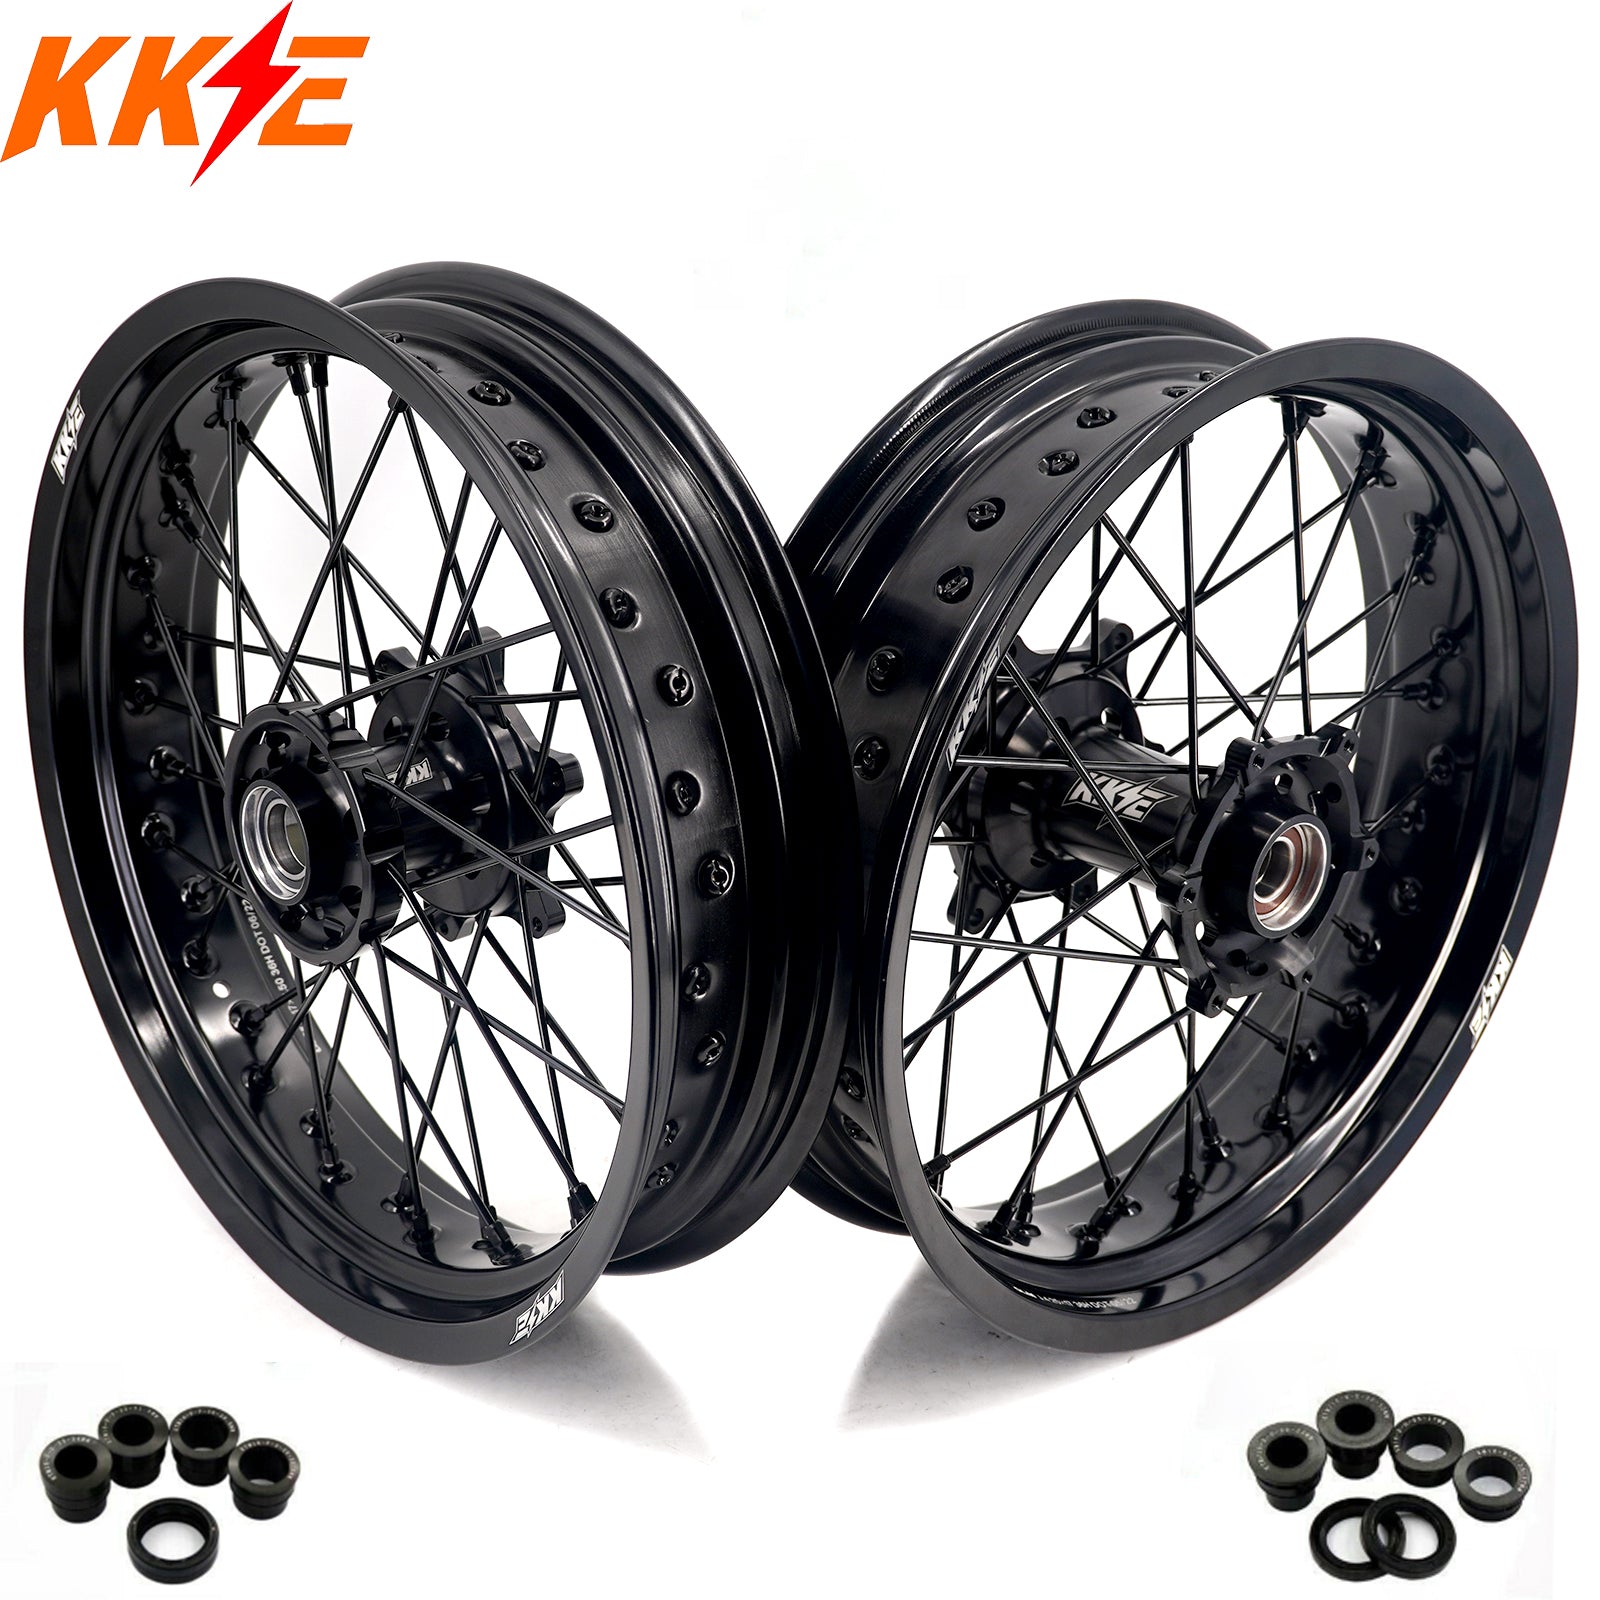 SM Wheels For KTM 125-530CC Series – KKE Racing